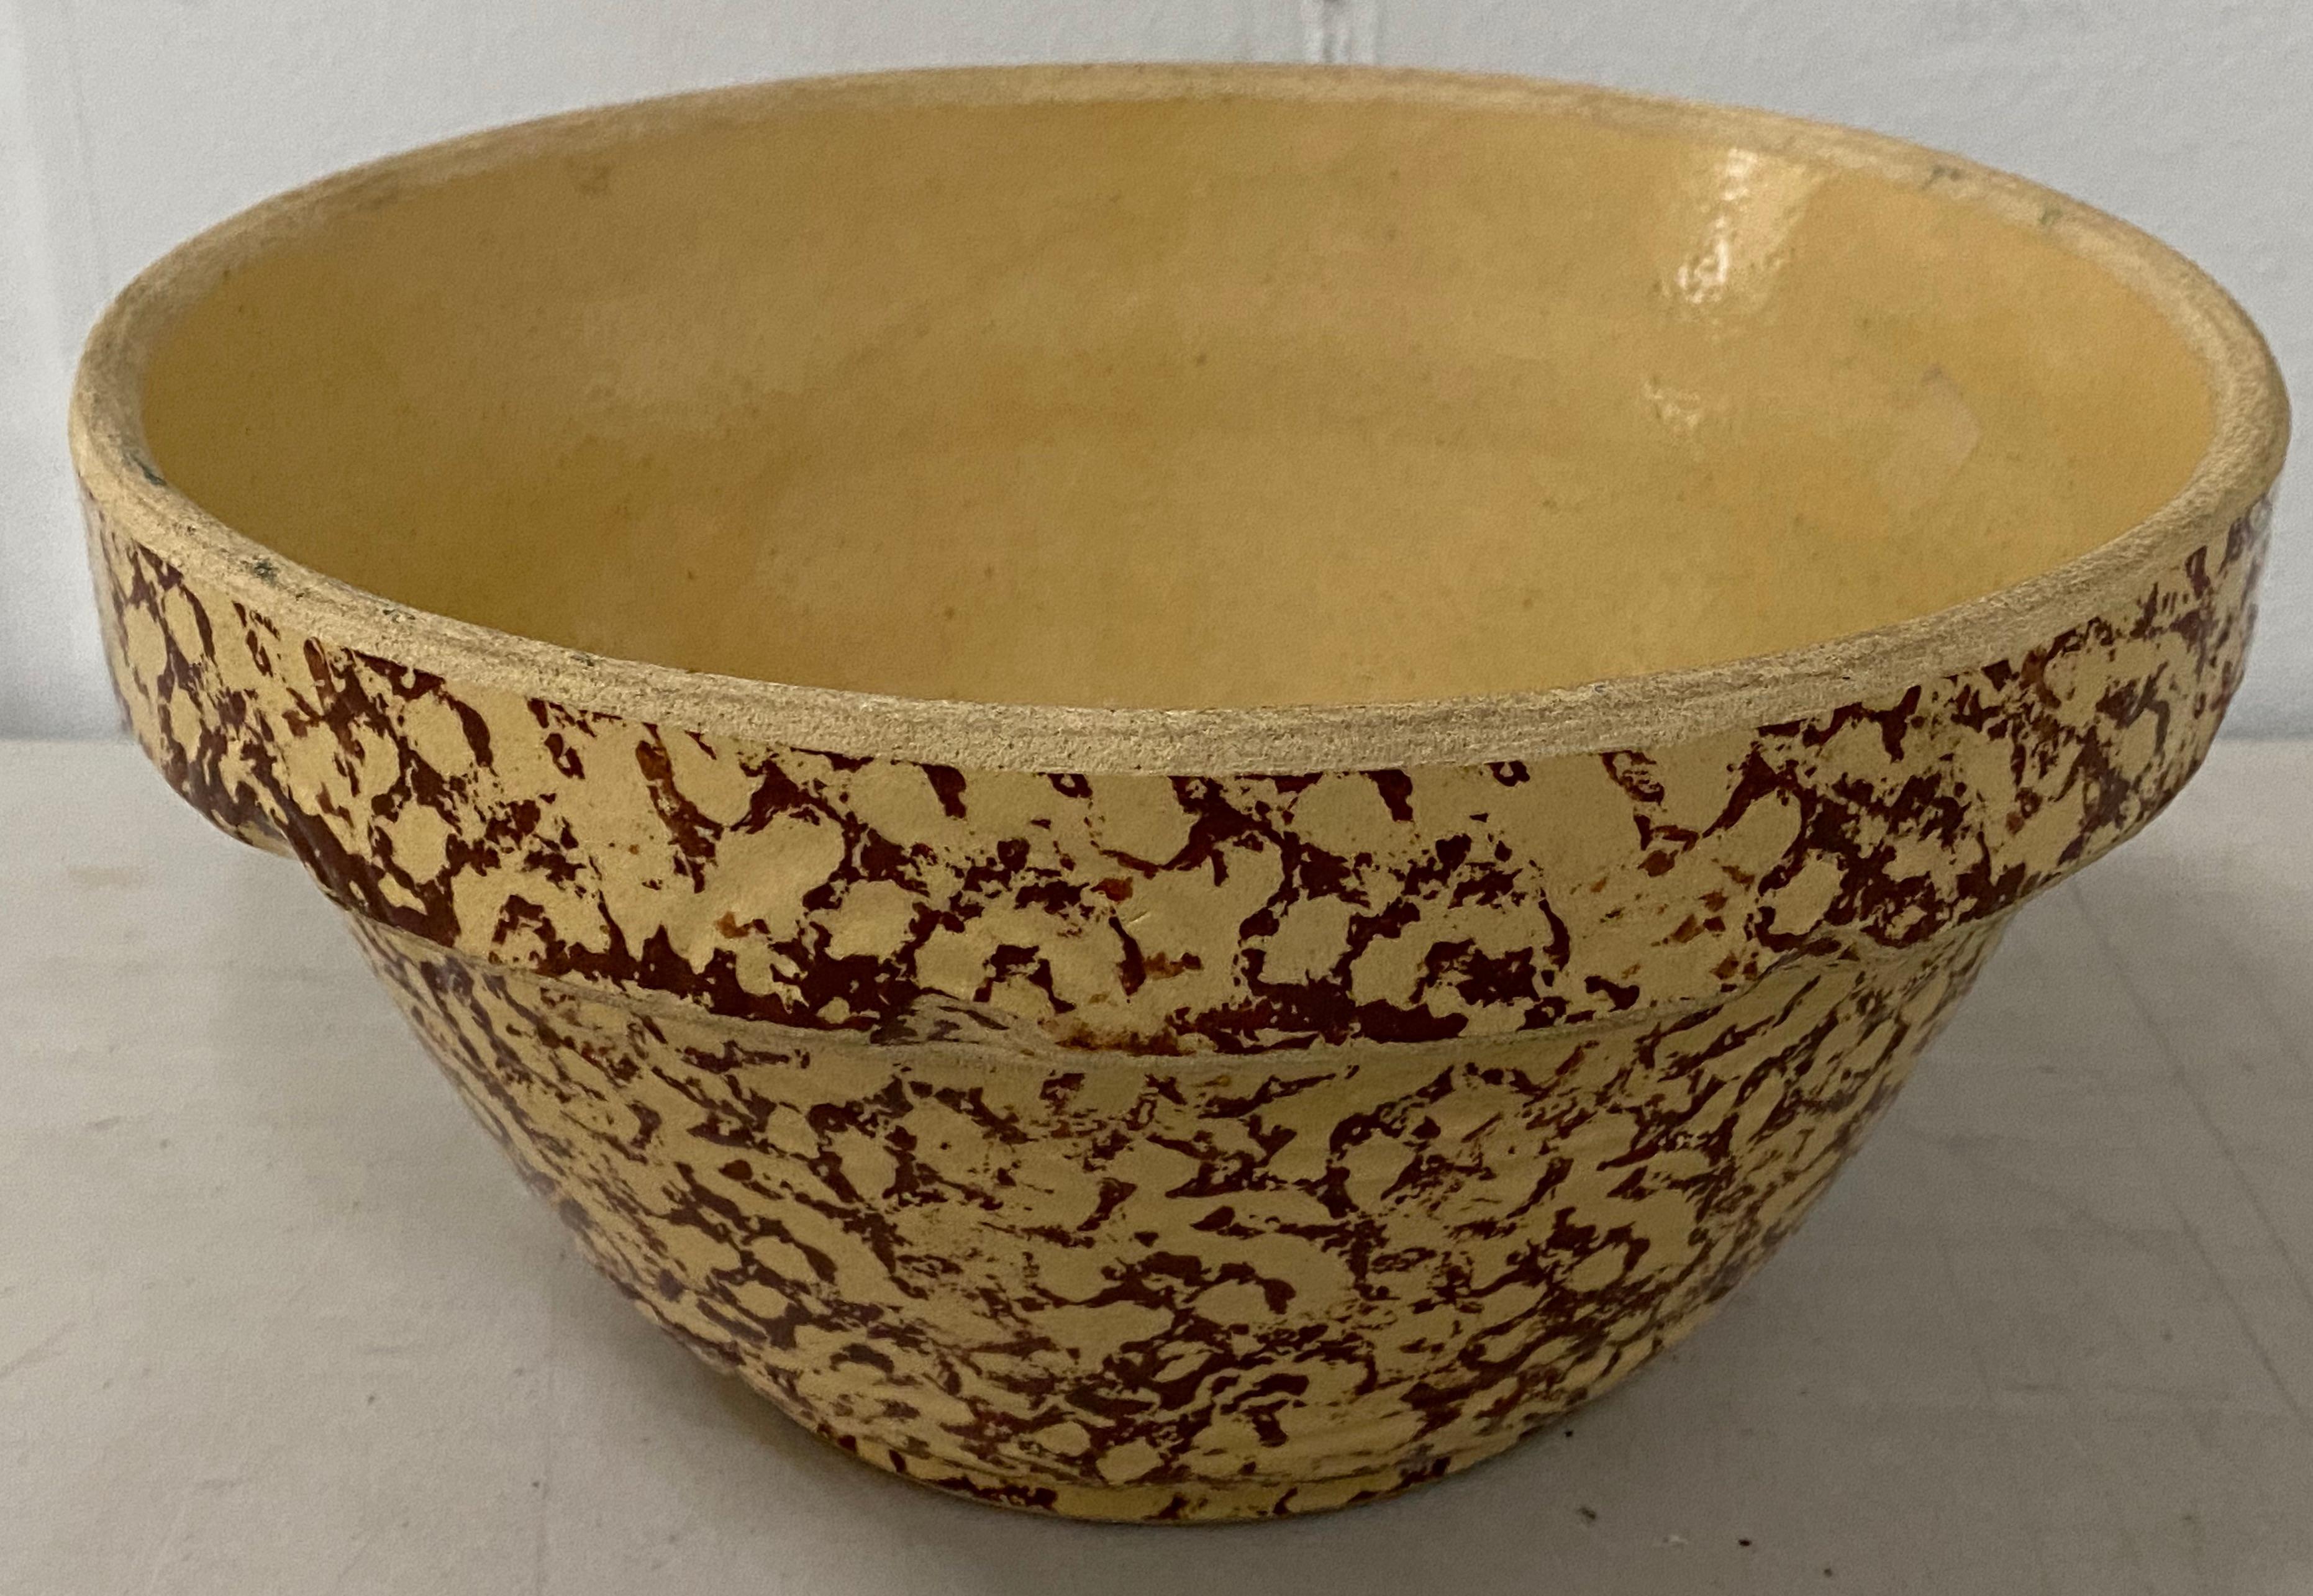 Early 20th century spongeware stoneware bowl

Measures: 10